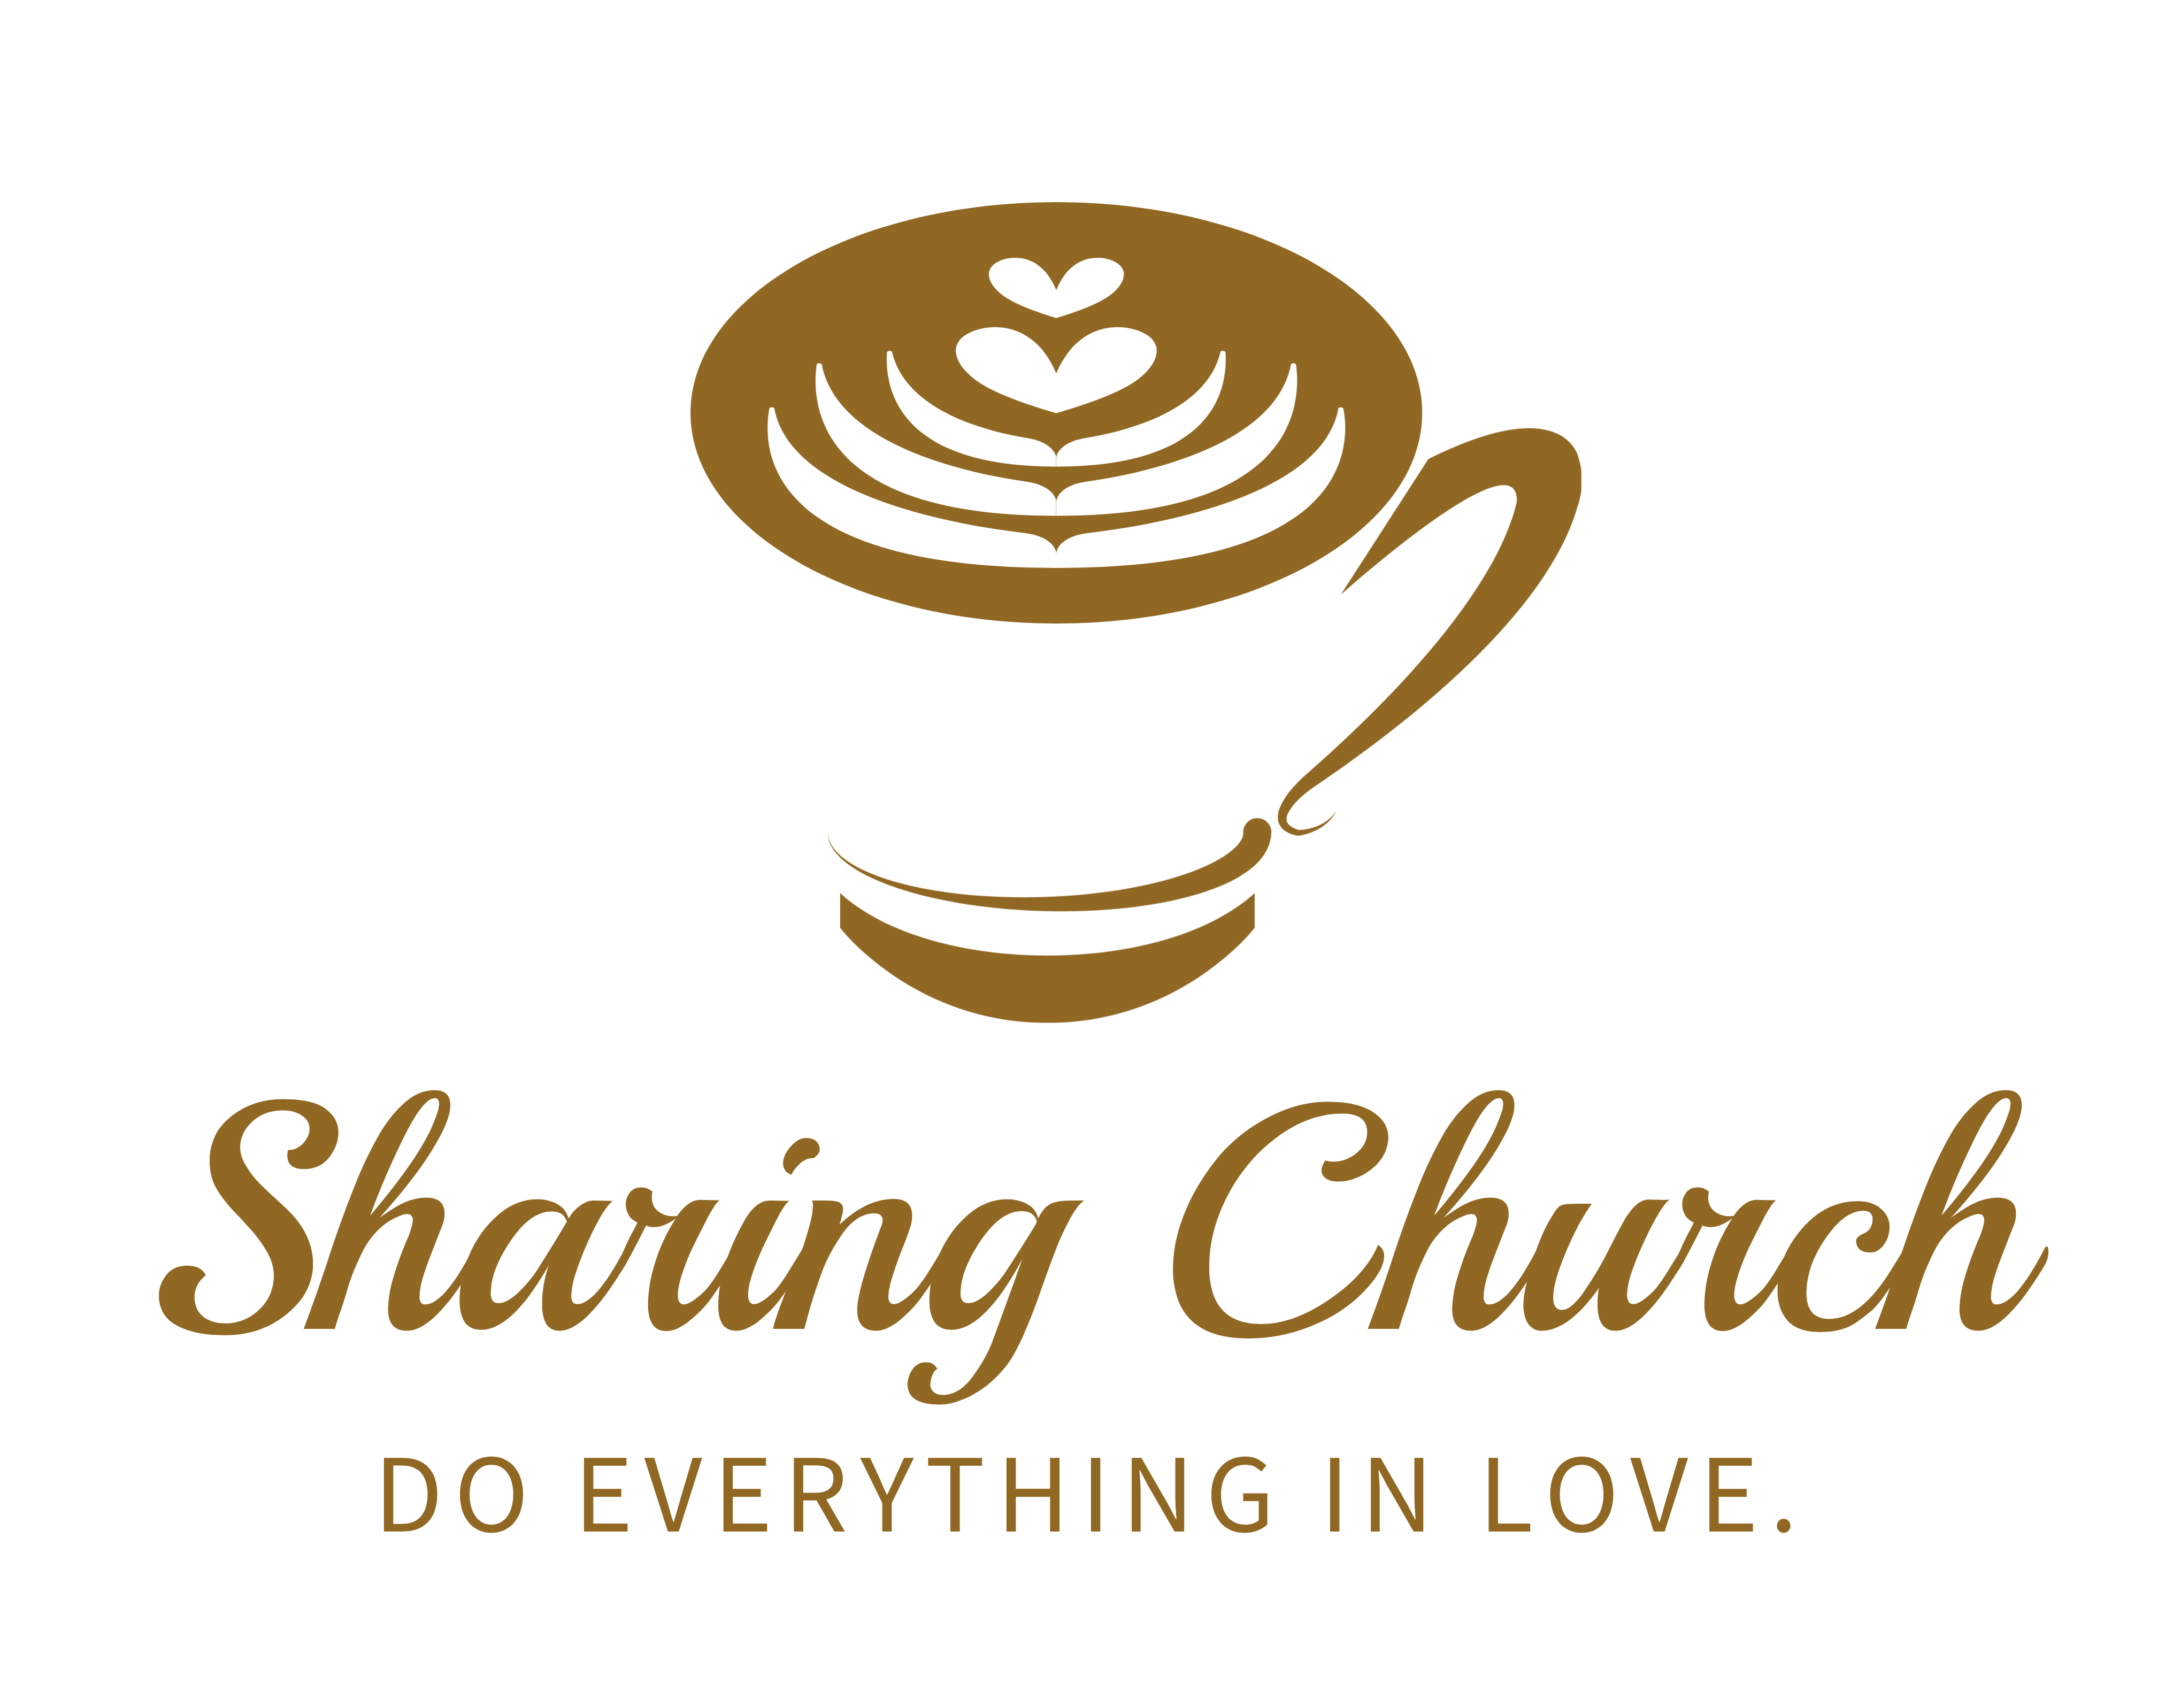 Sharing Church